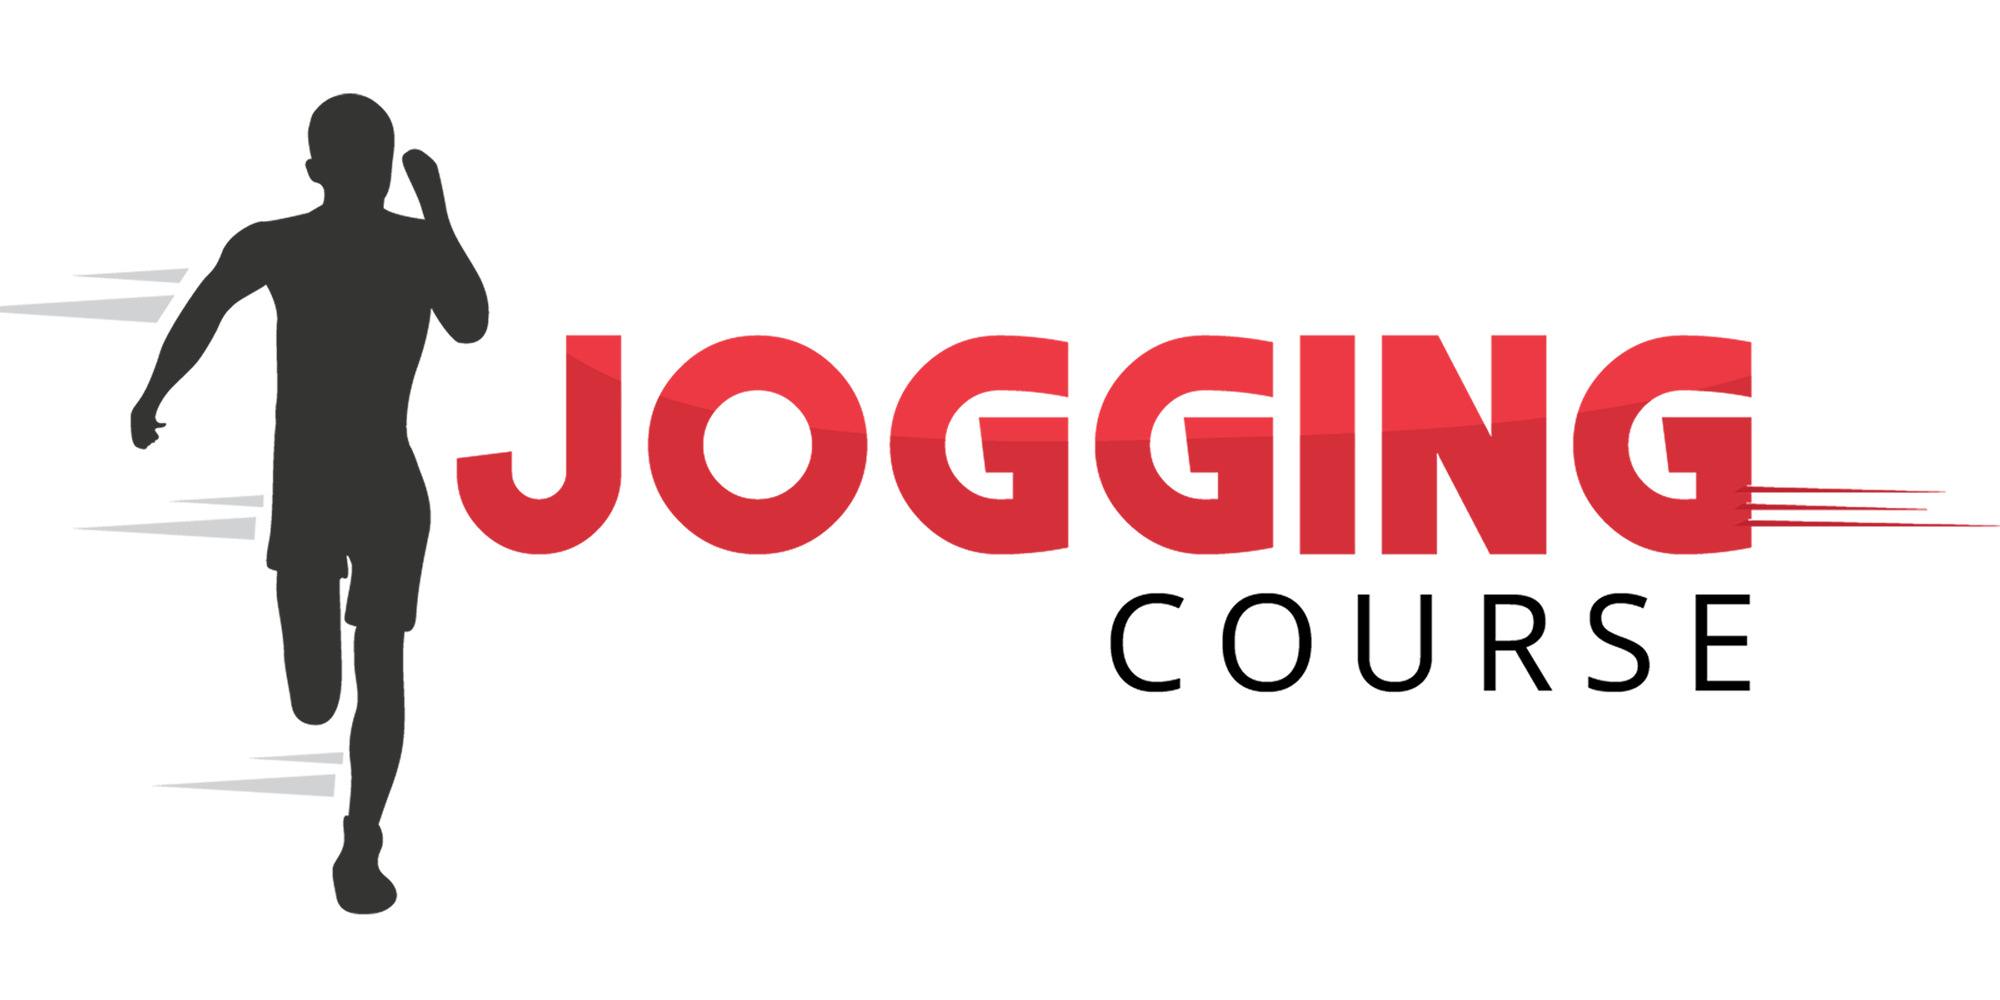 Jogging course